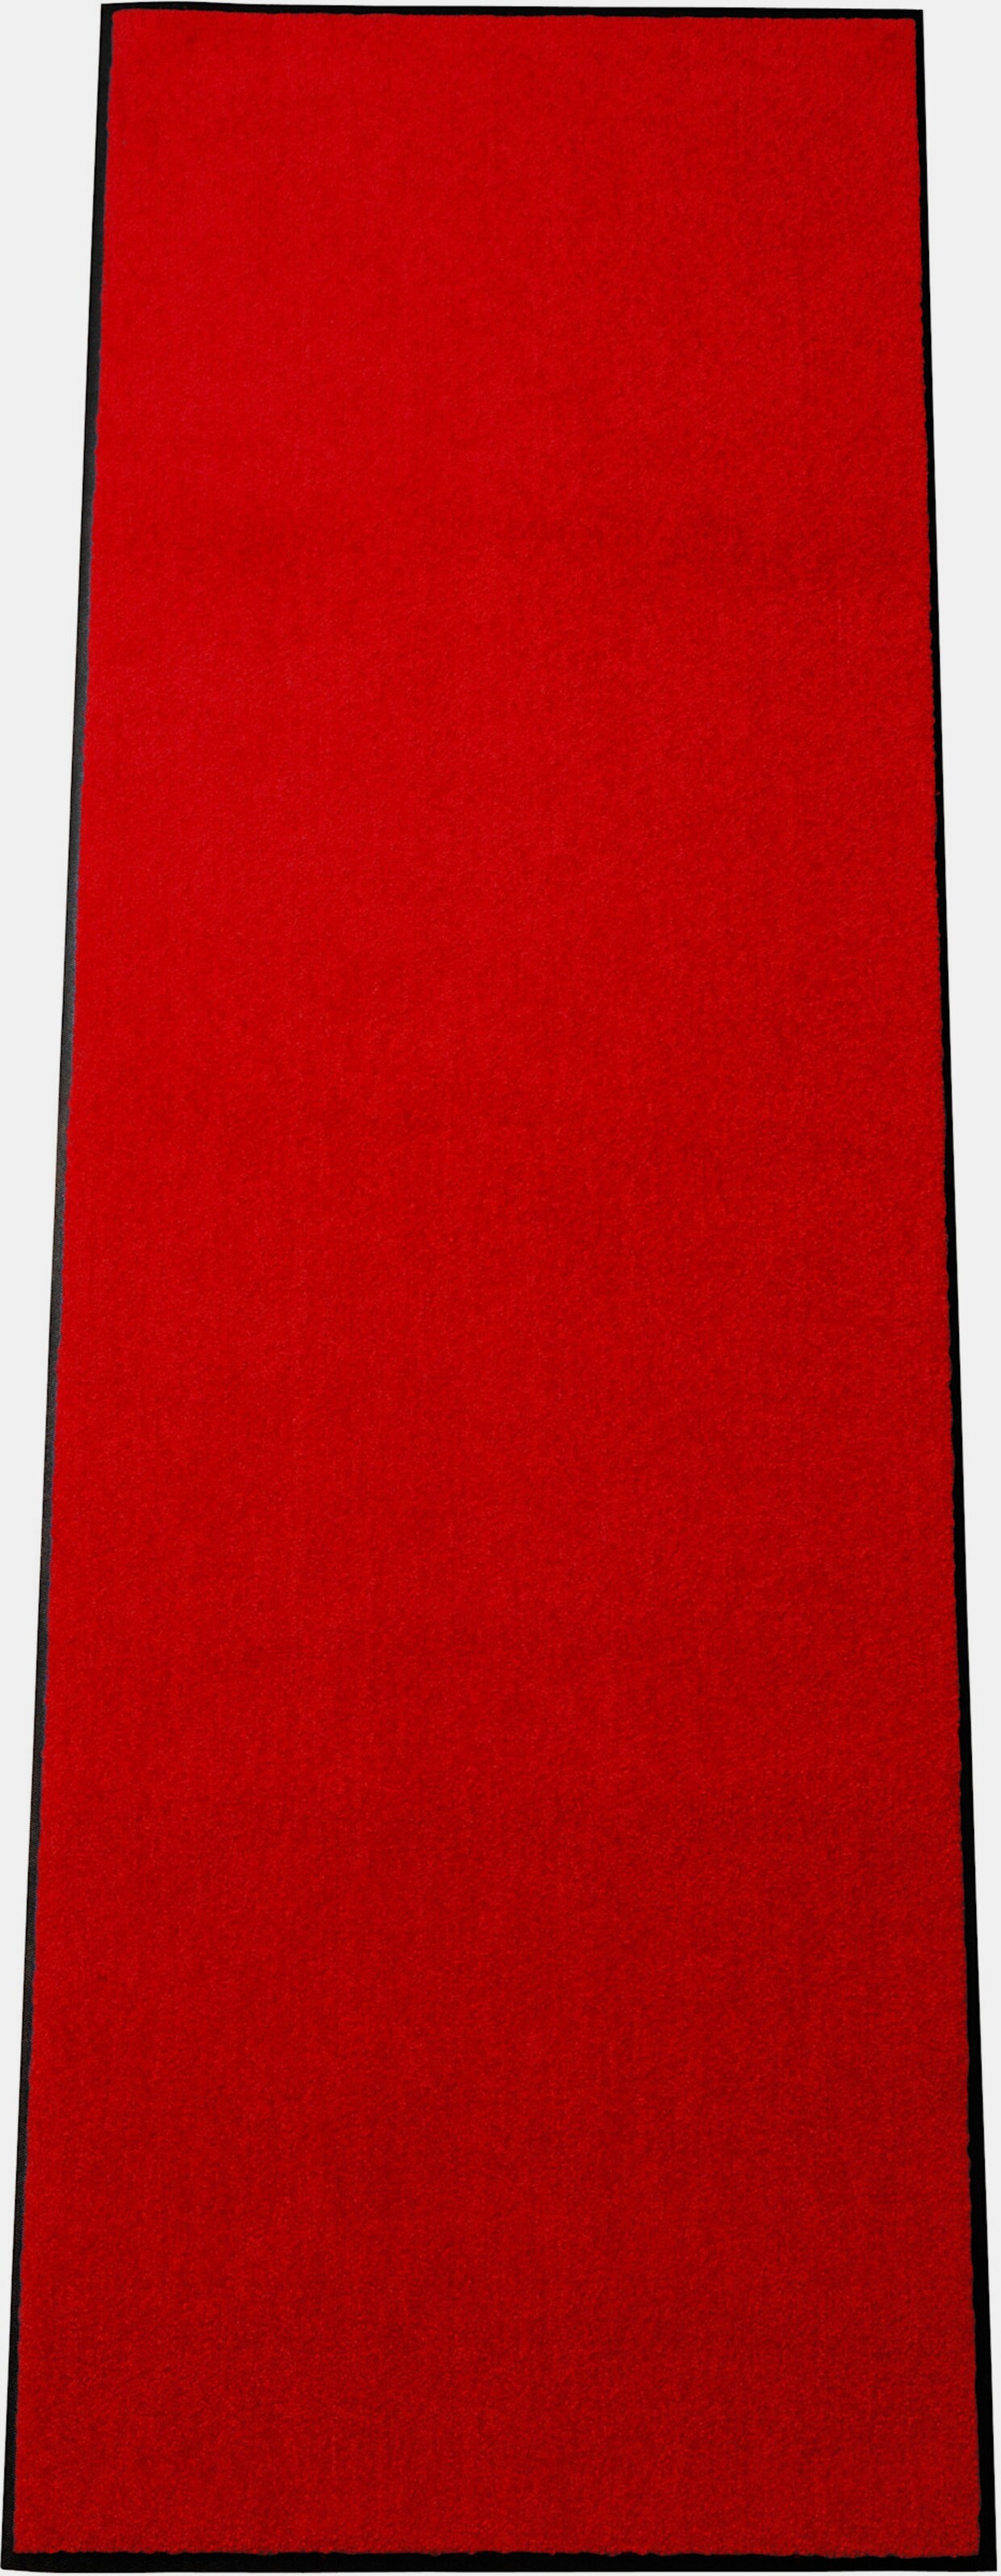 Salonloewe Voetmat - rood